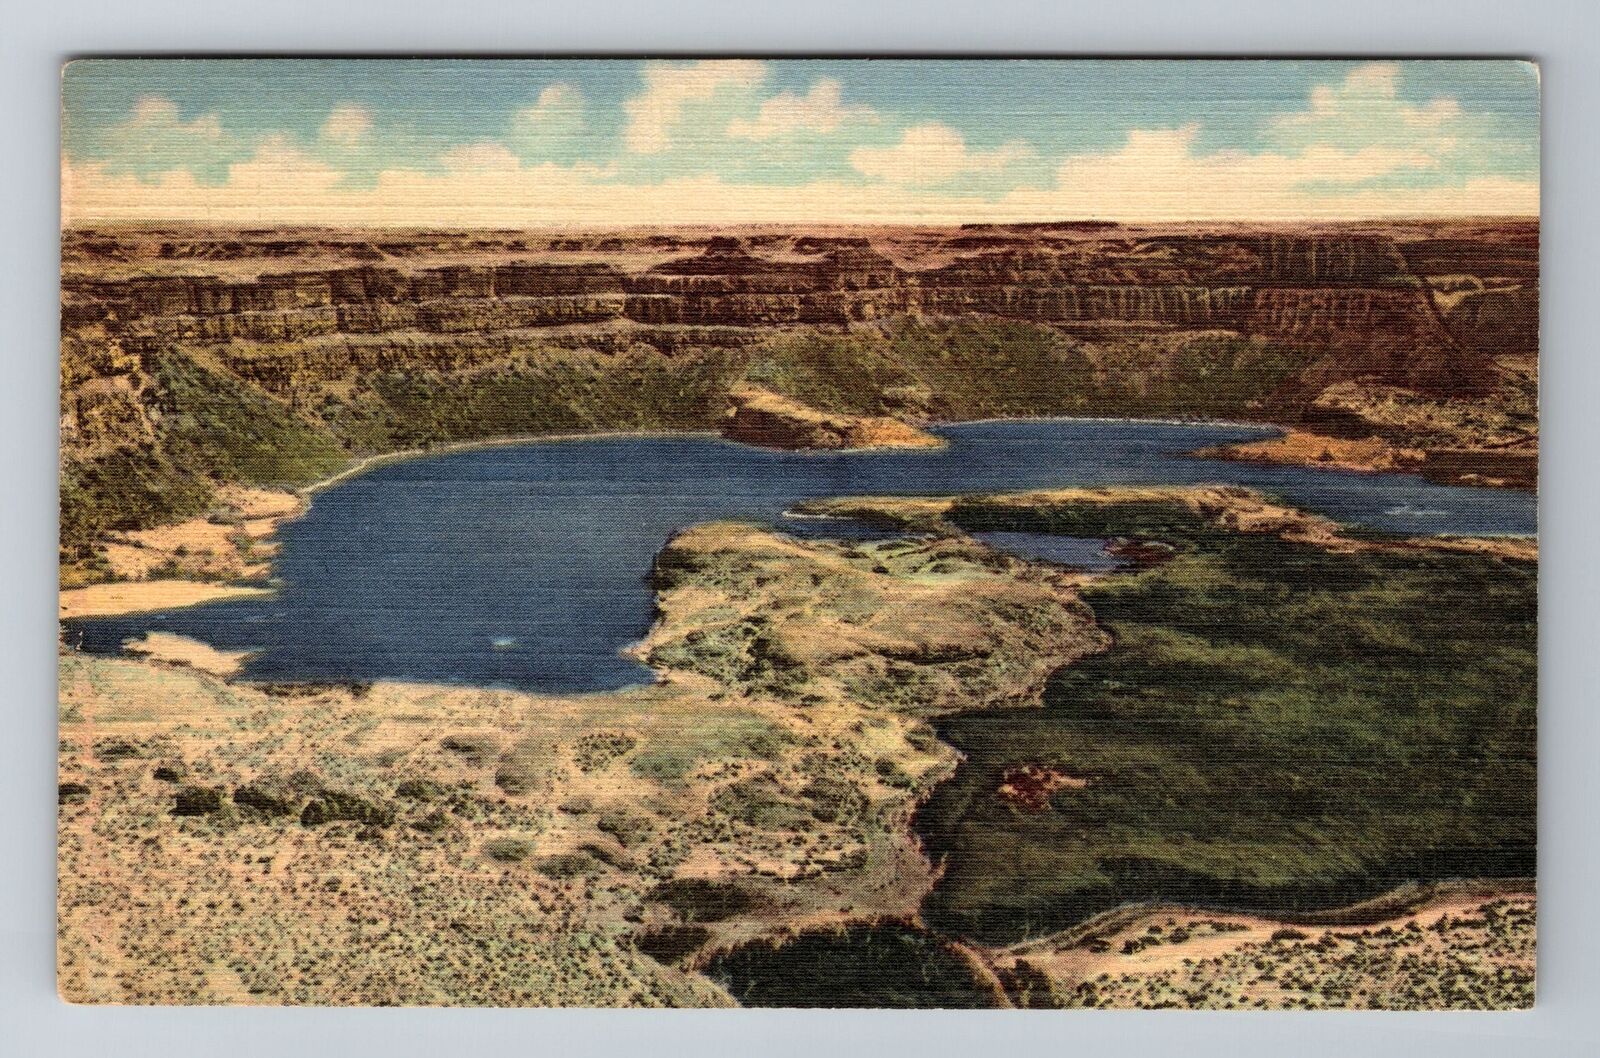 WA-Washington, Dry Falls State Park, Grand Coulee, Vintage c1951 Postcard